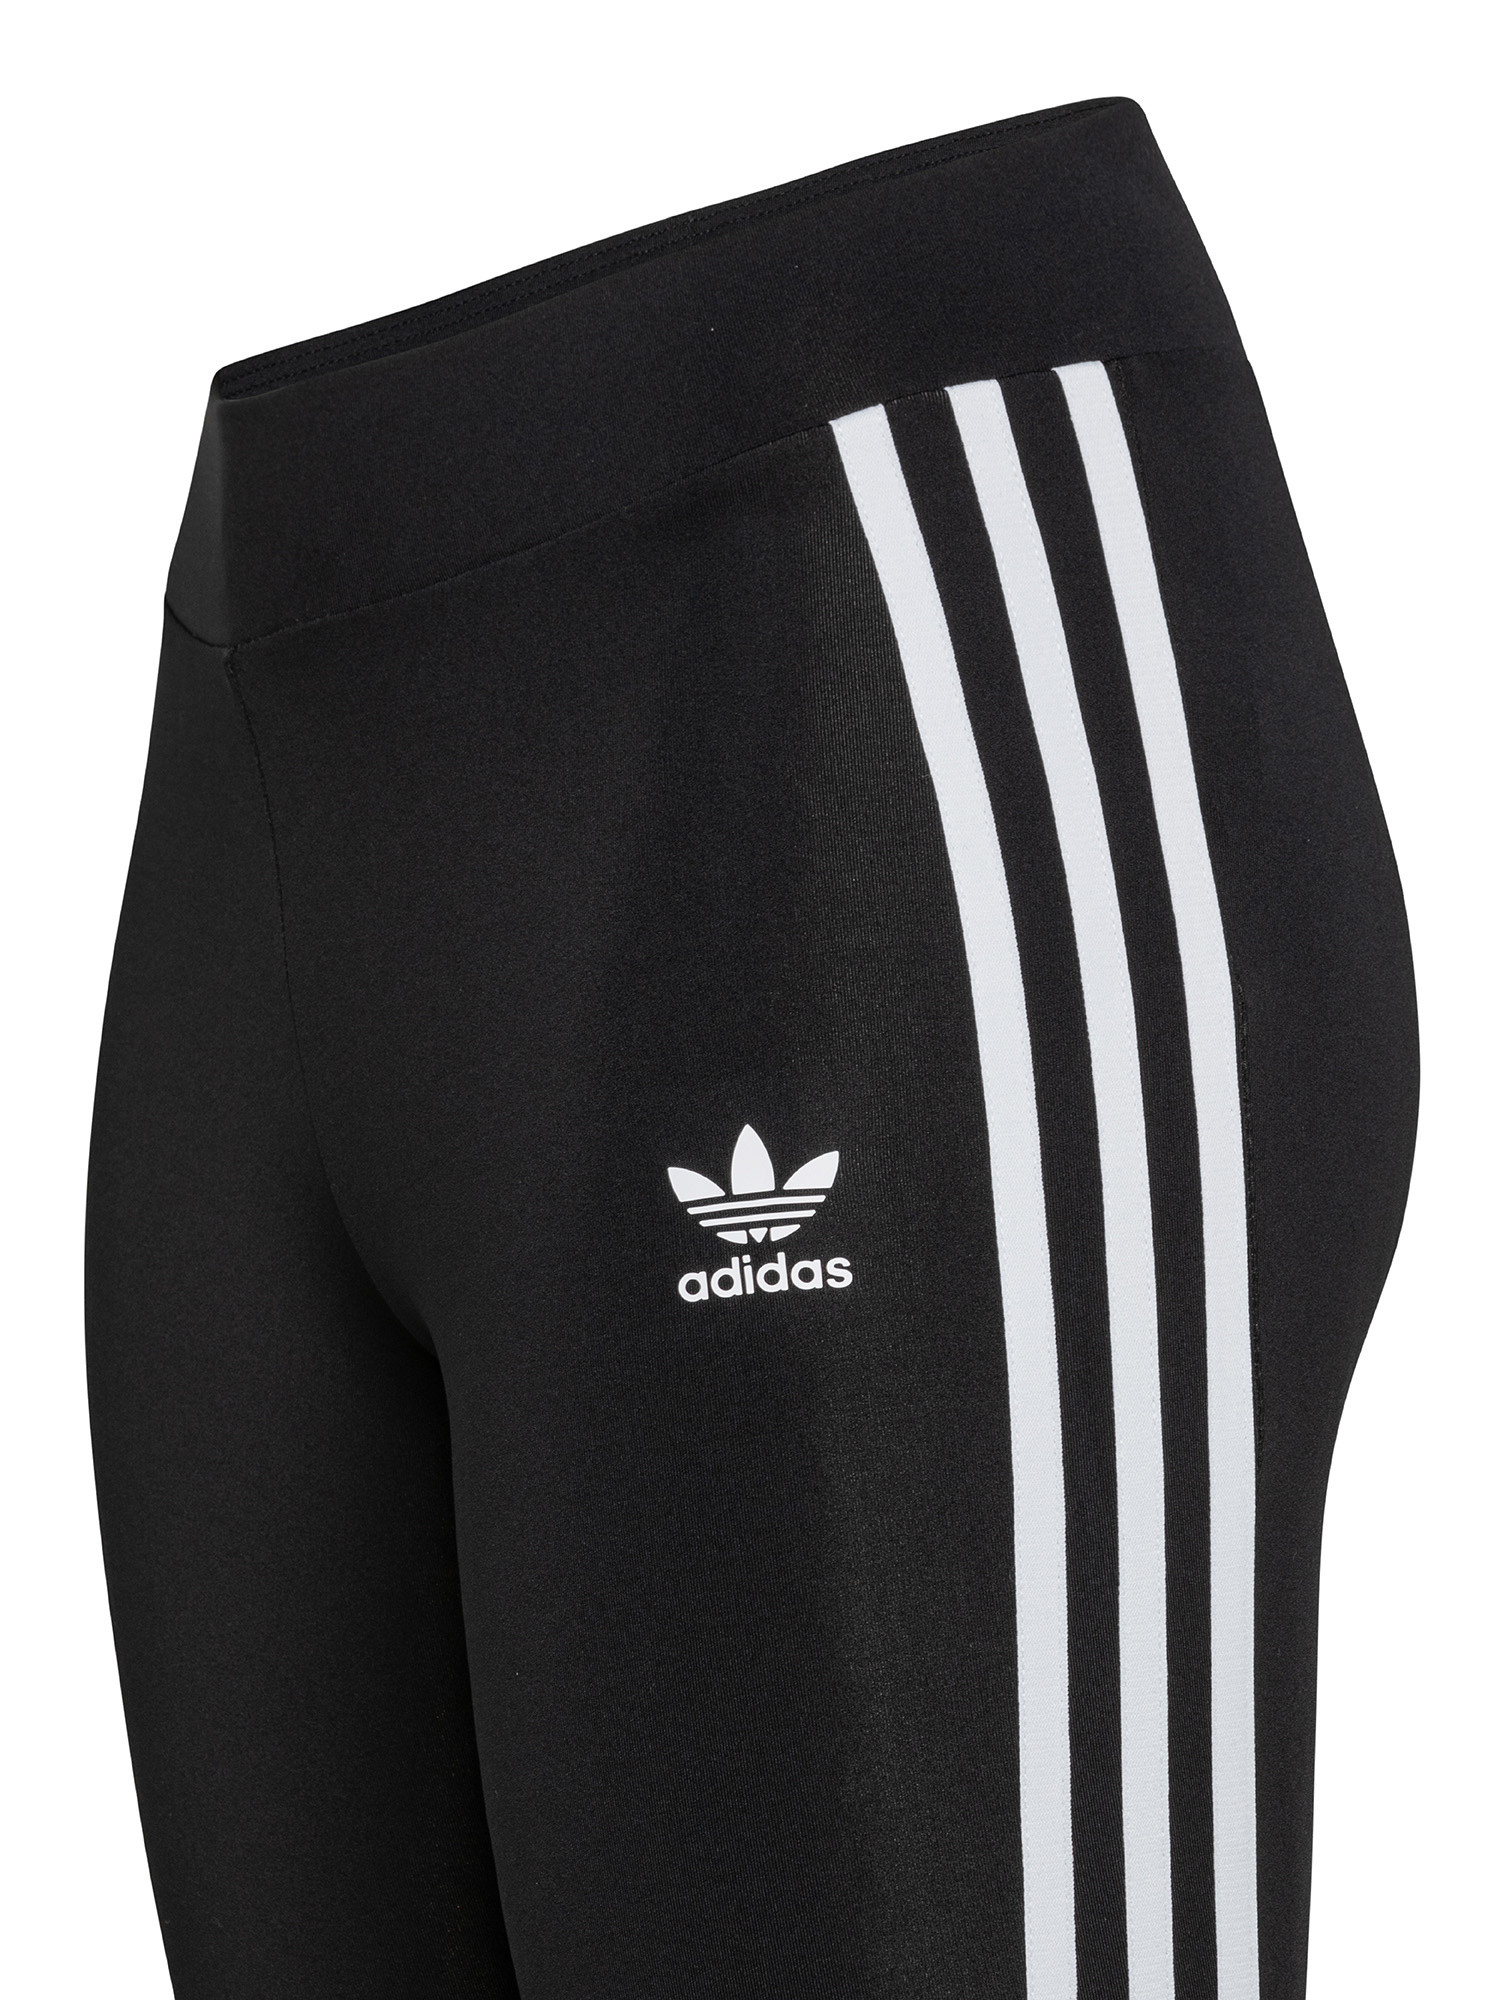 Adidas - Adicolor flared leggings, Black, large image number 8